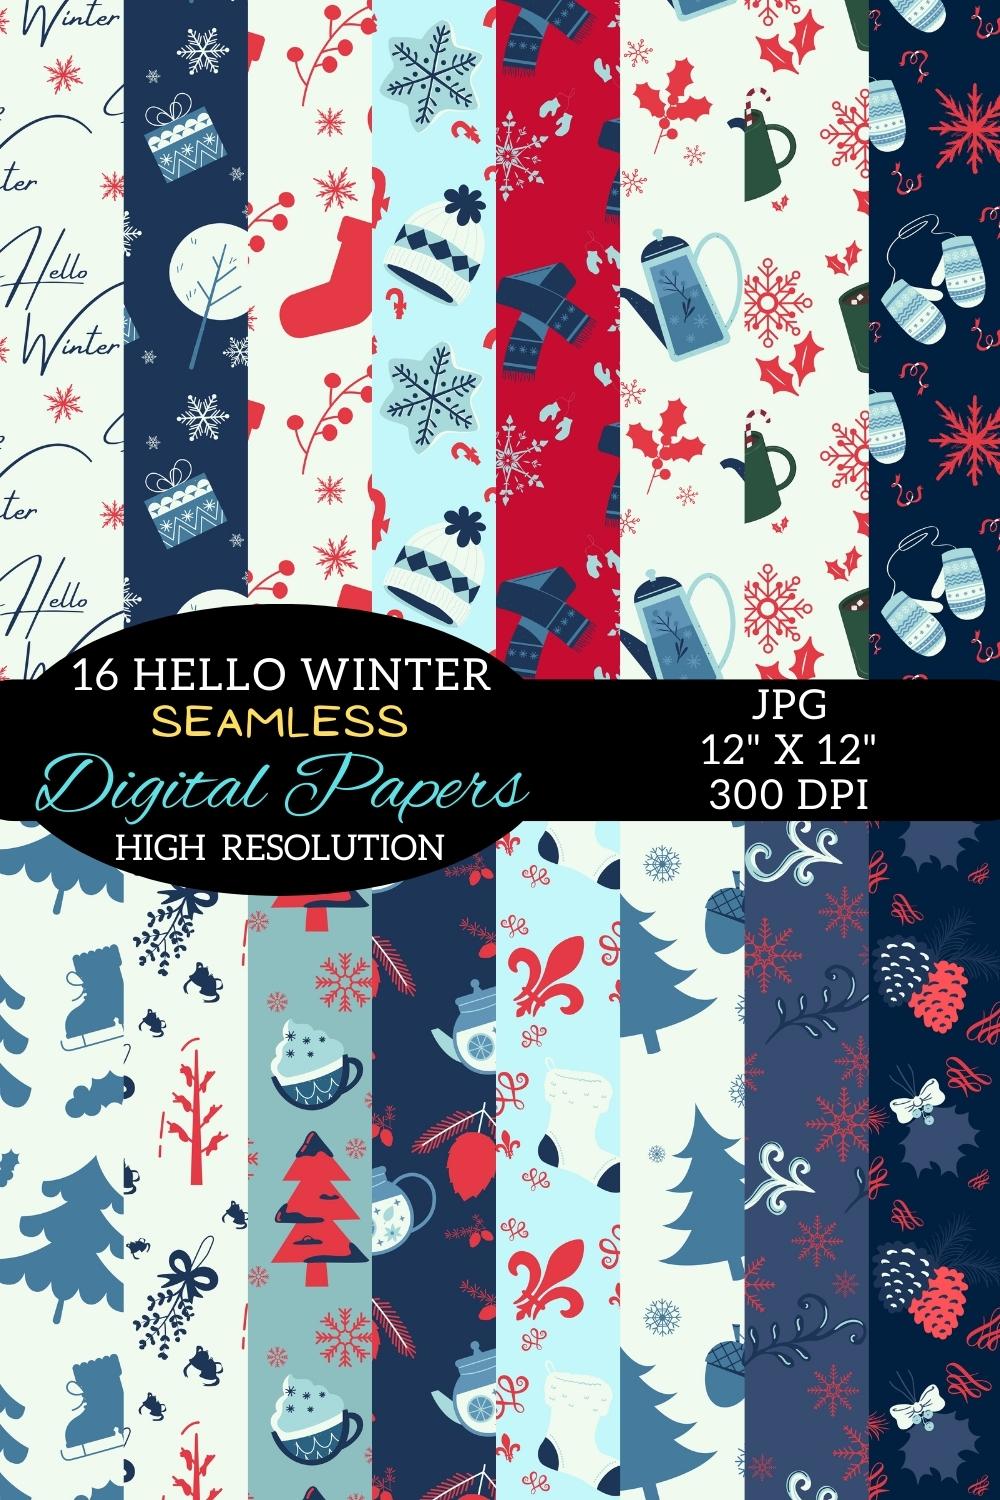 Winter Digital Paper Patterns Design pinterest image.